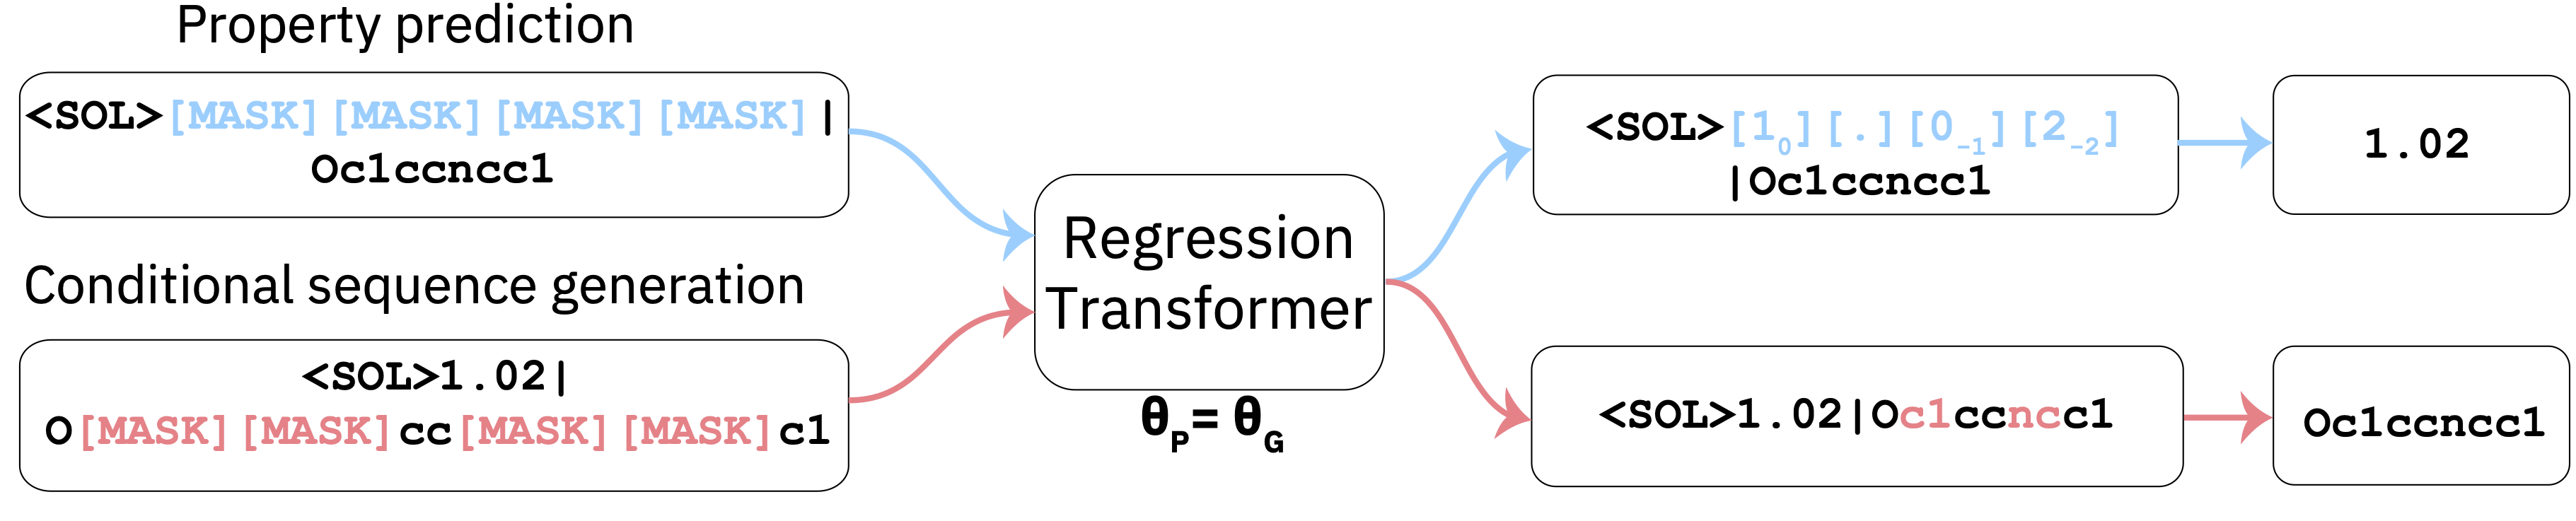 regression_transformer.png